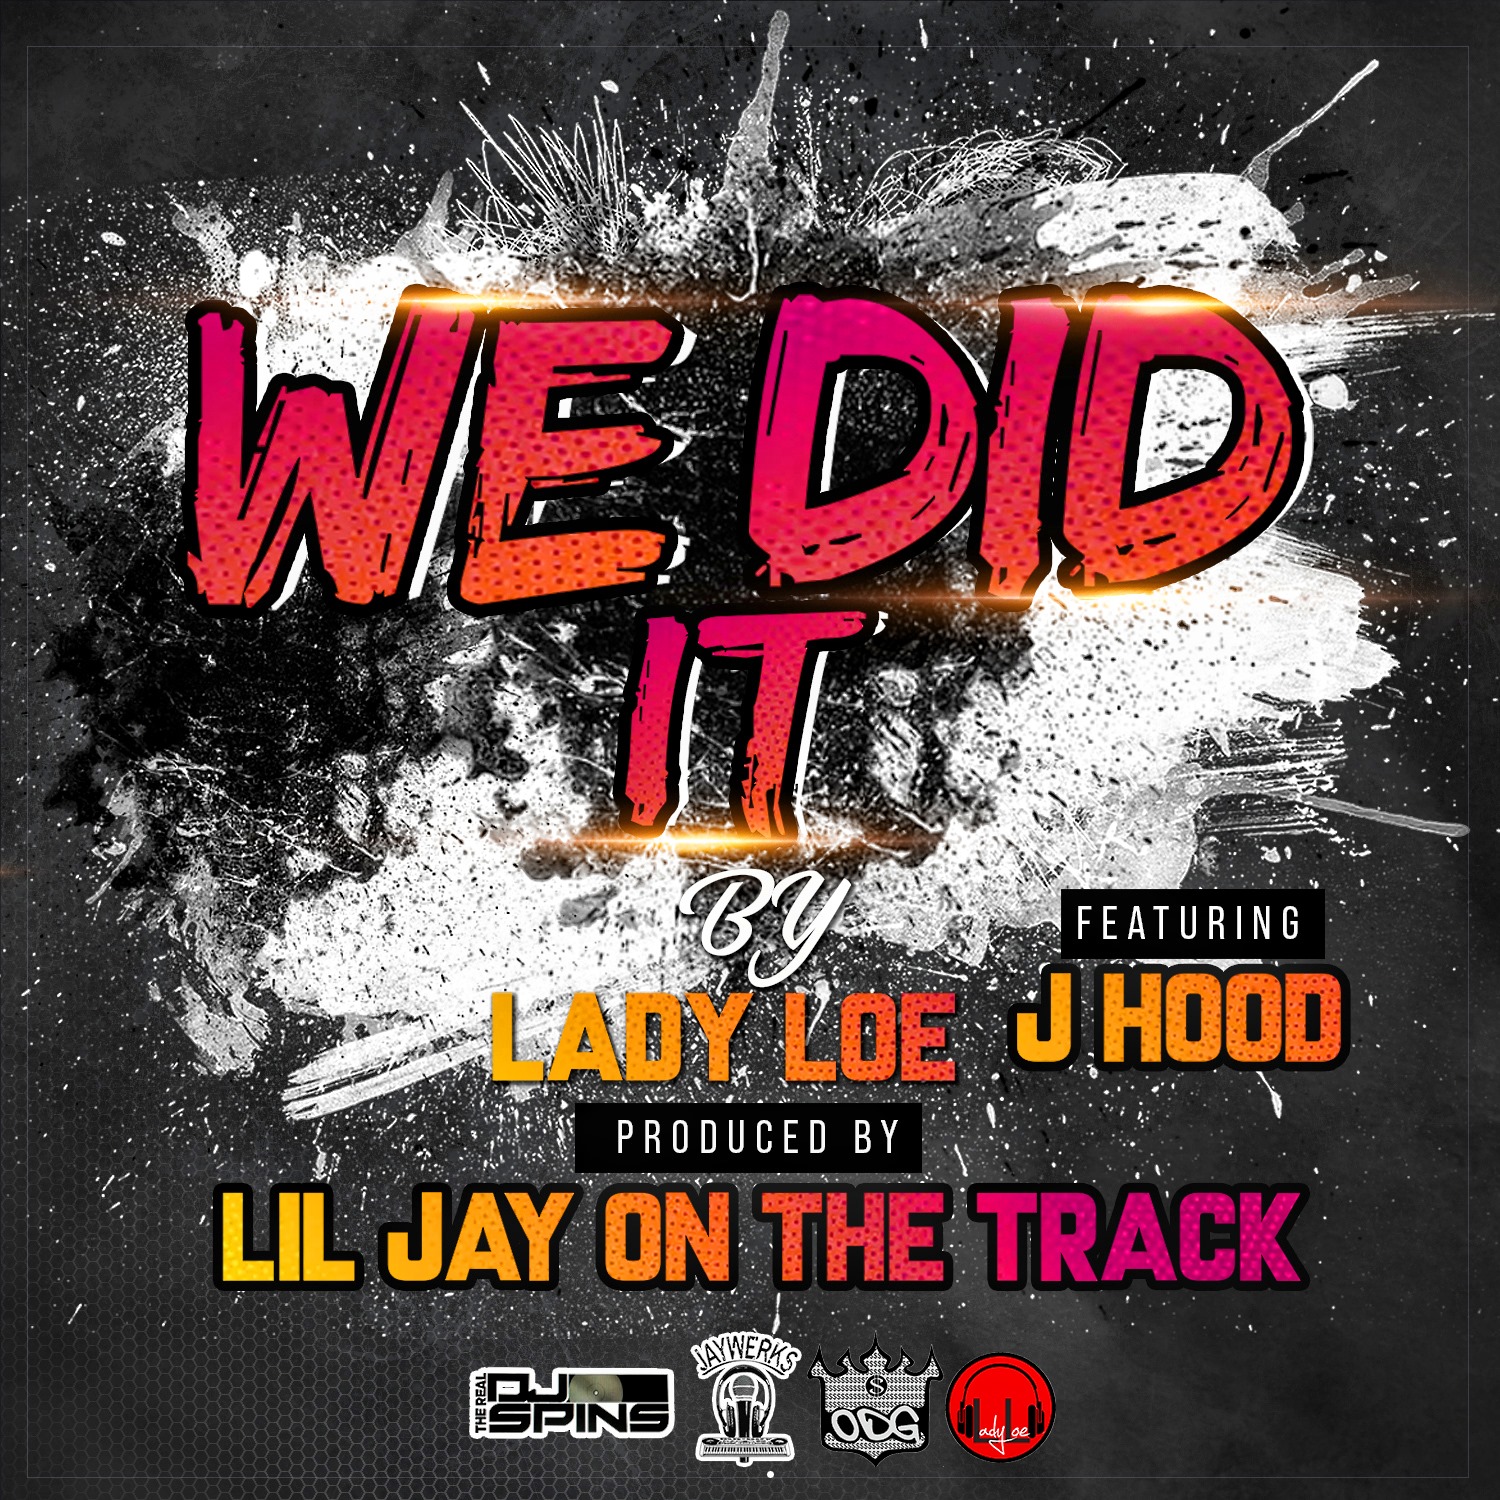 Art for We Did It (Feat J HOOD)  by Lady Loe